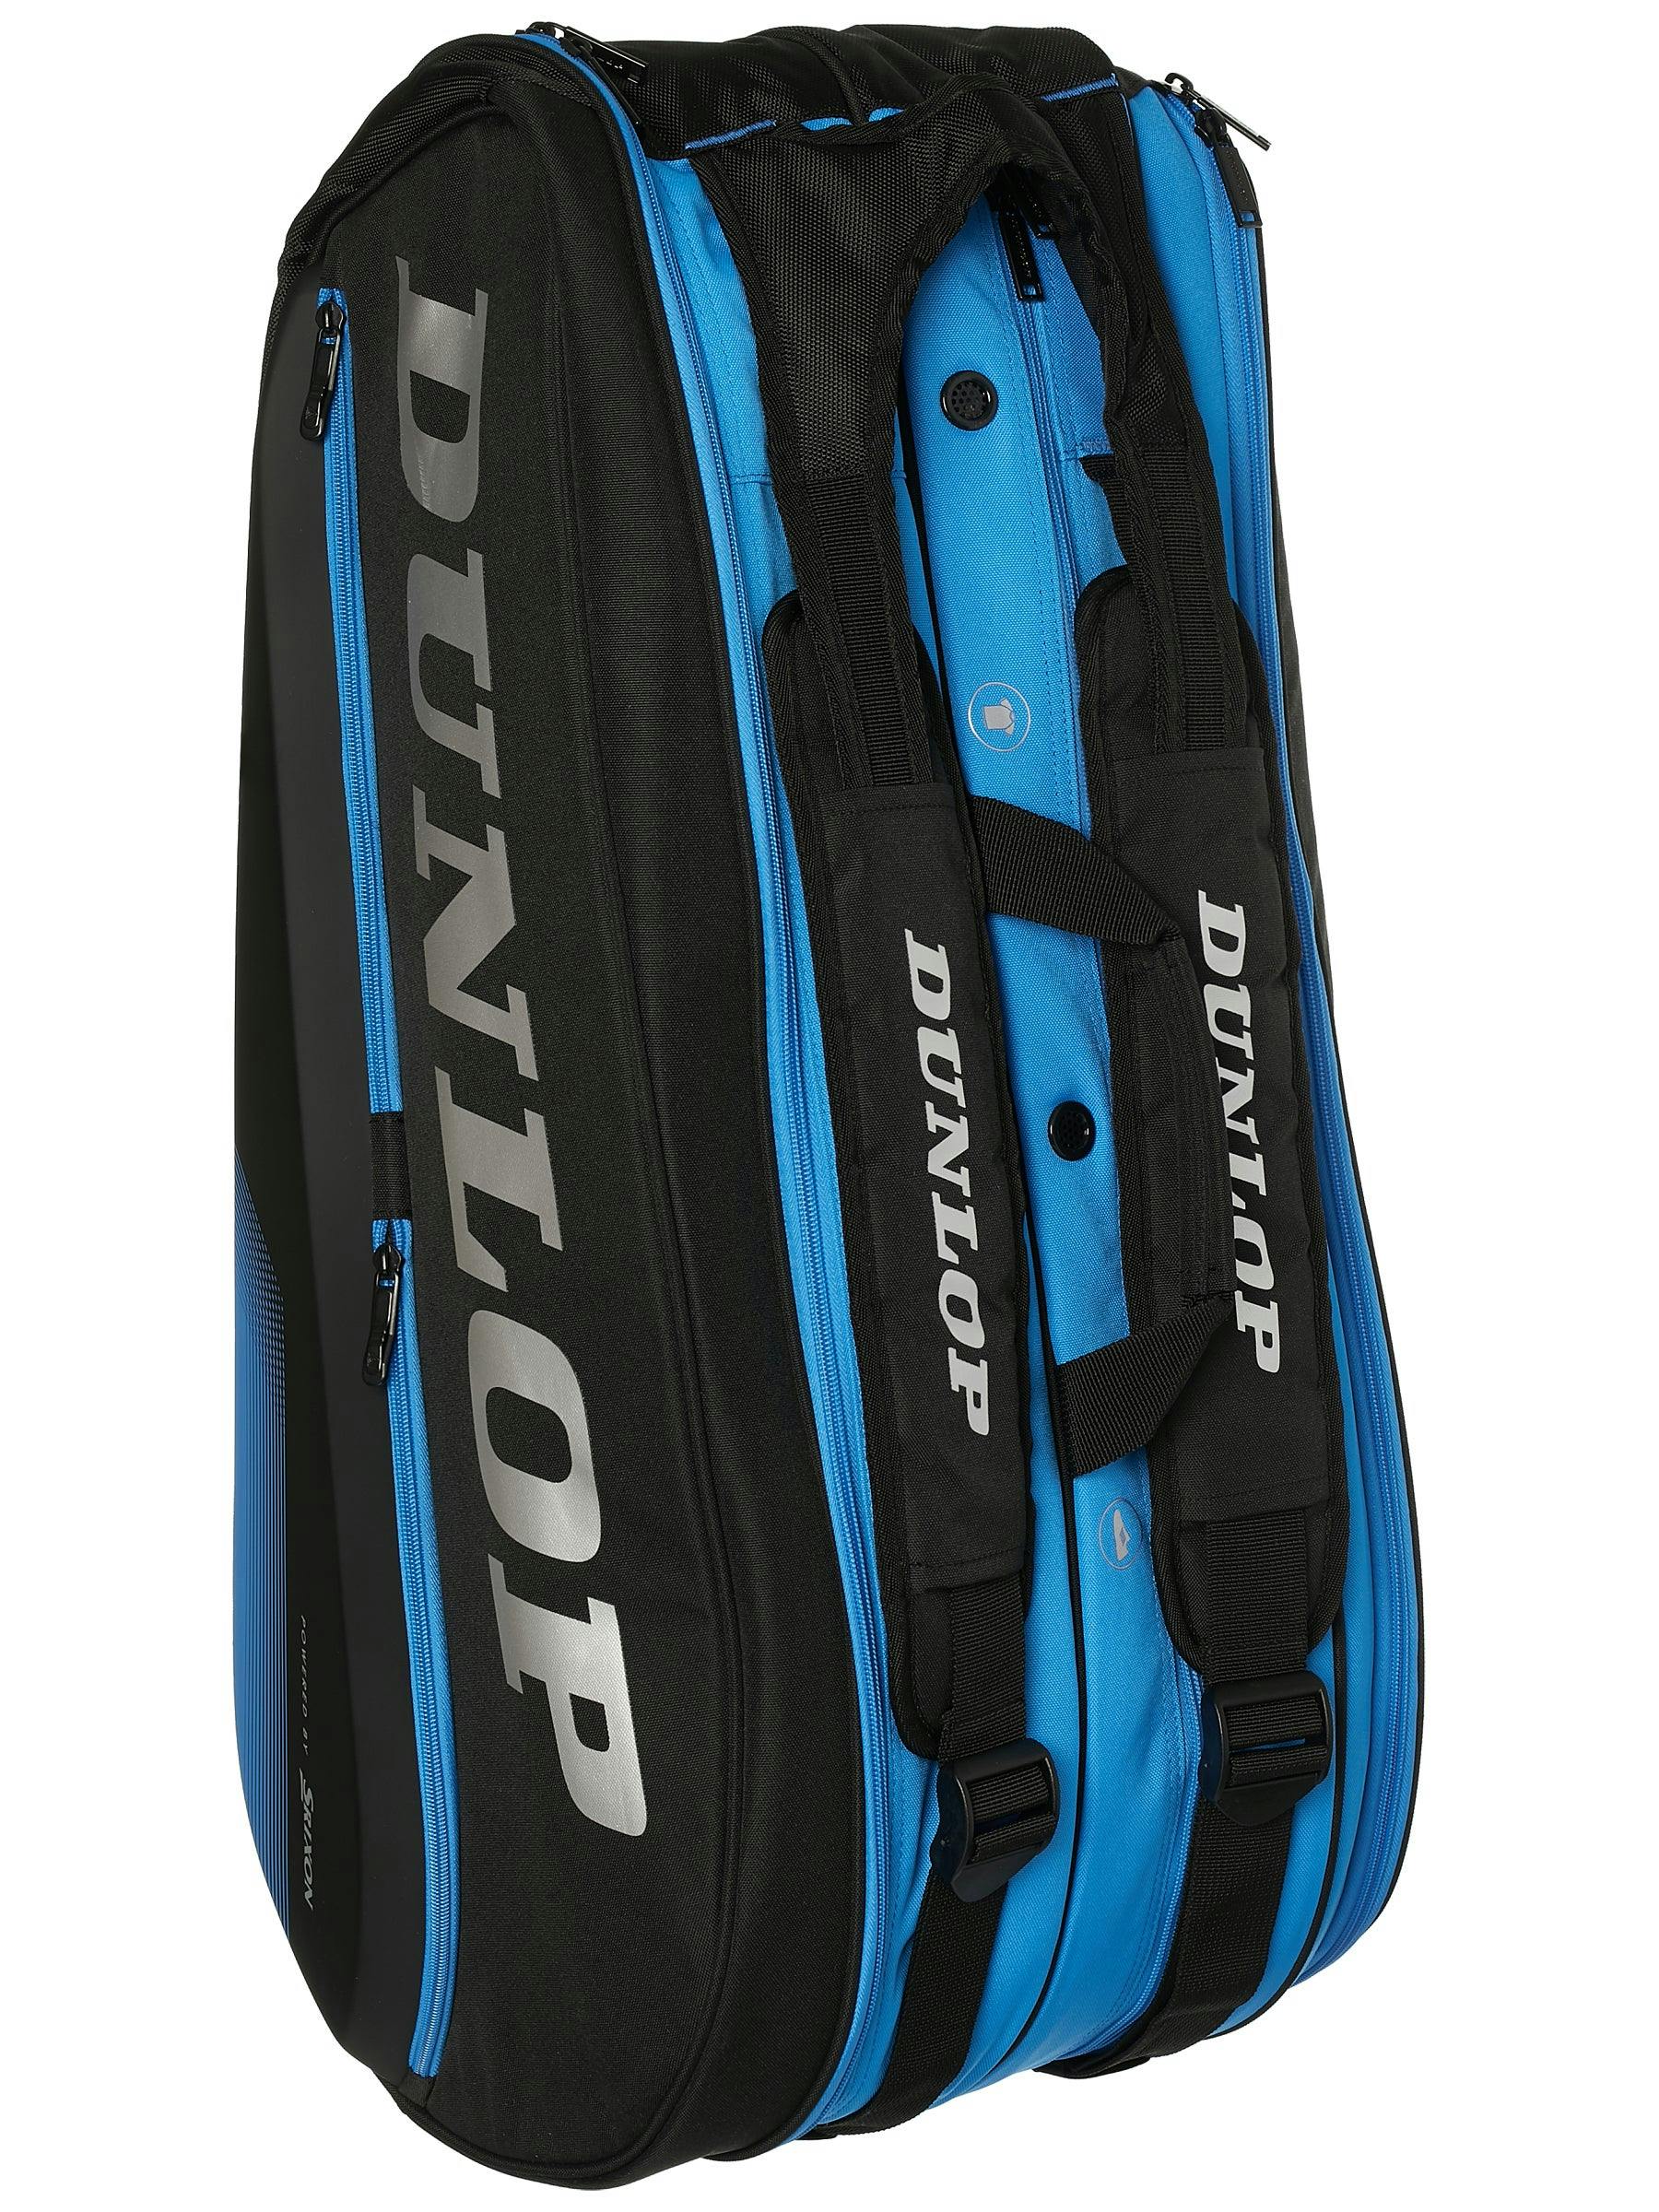 Dunlop FX Performance Thermo x 12 Tennis Bag - Black/Blue